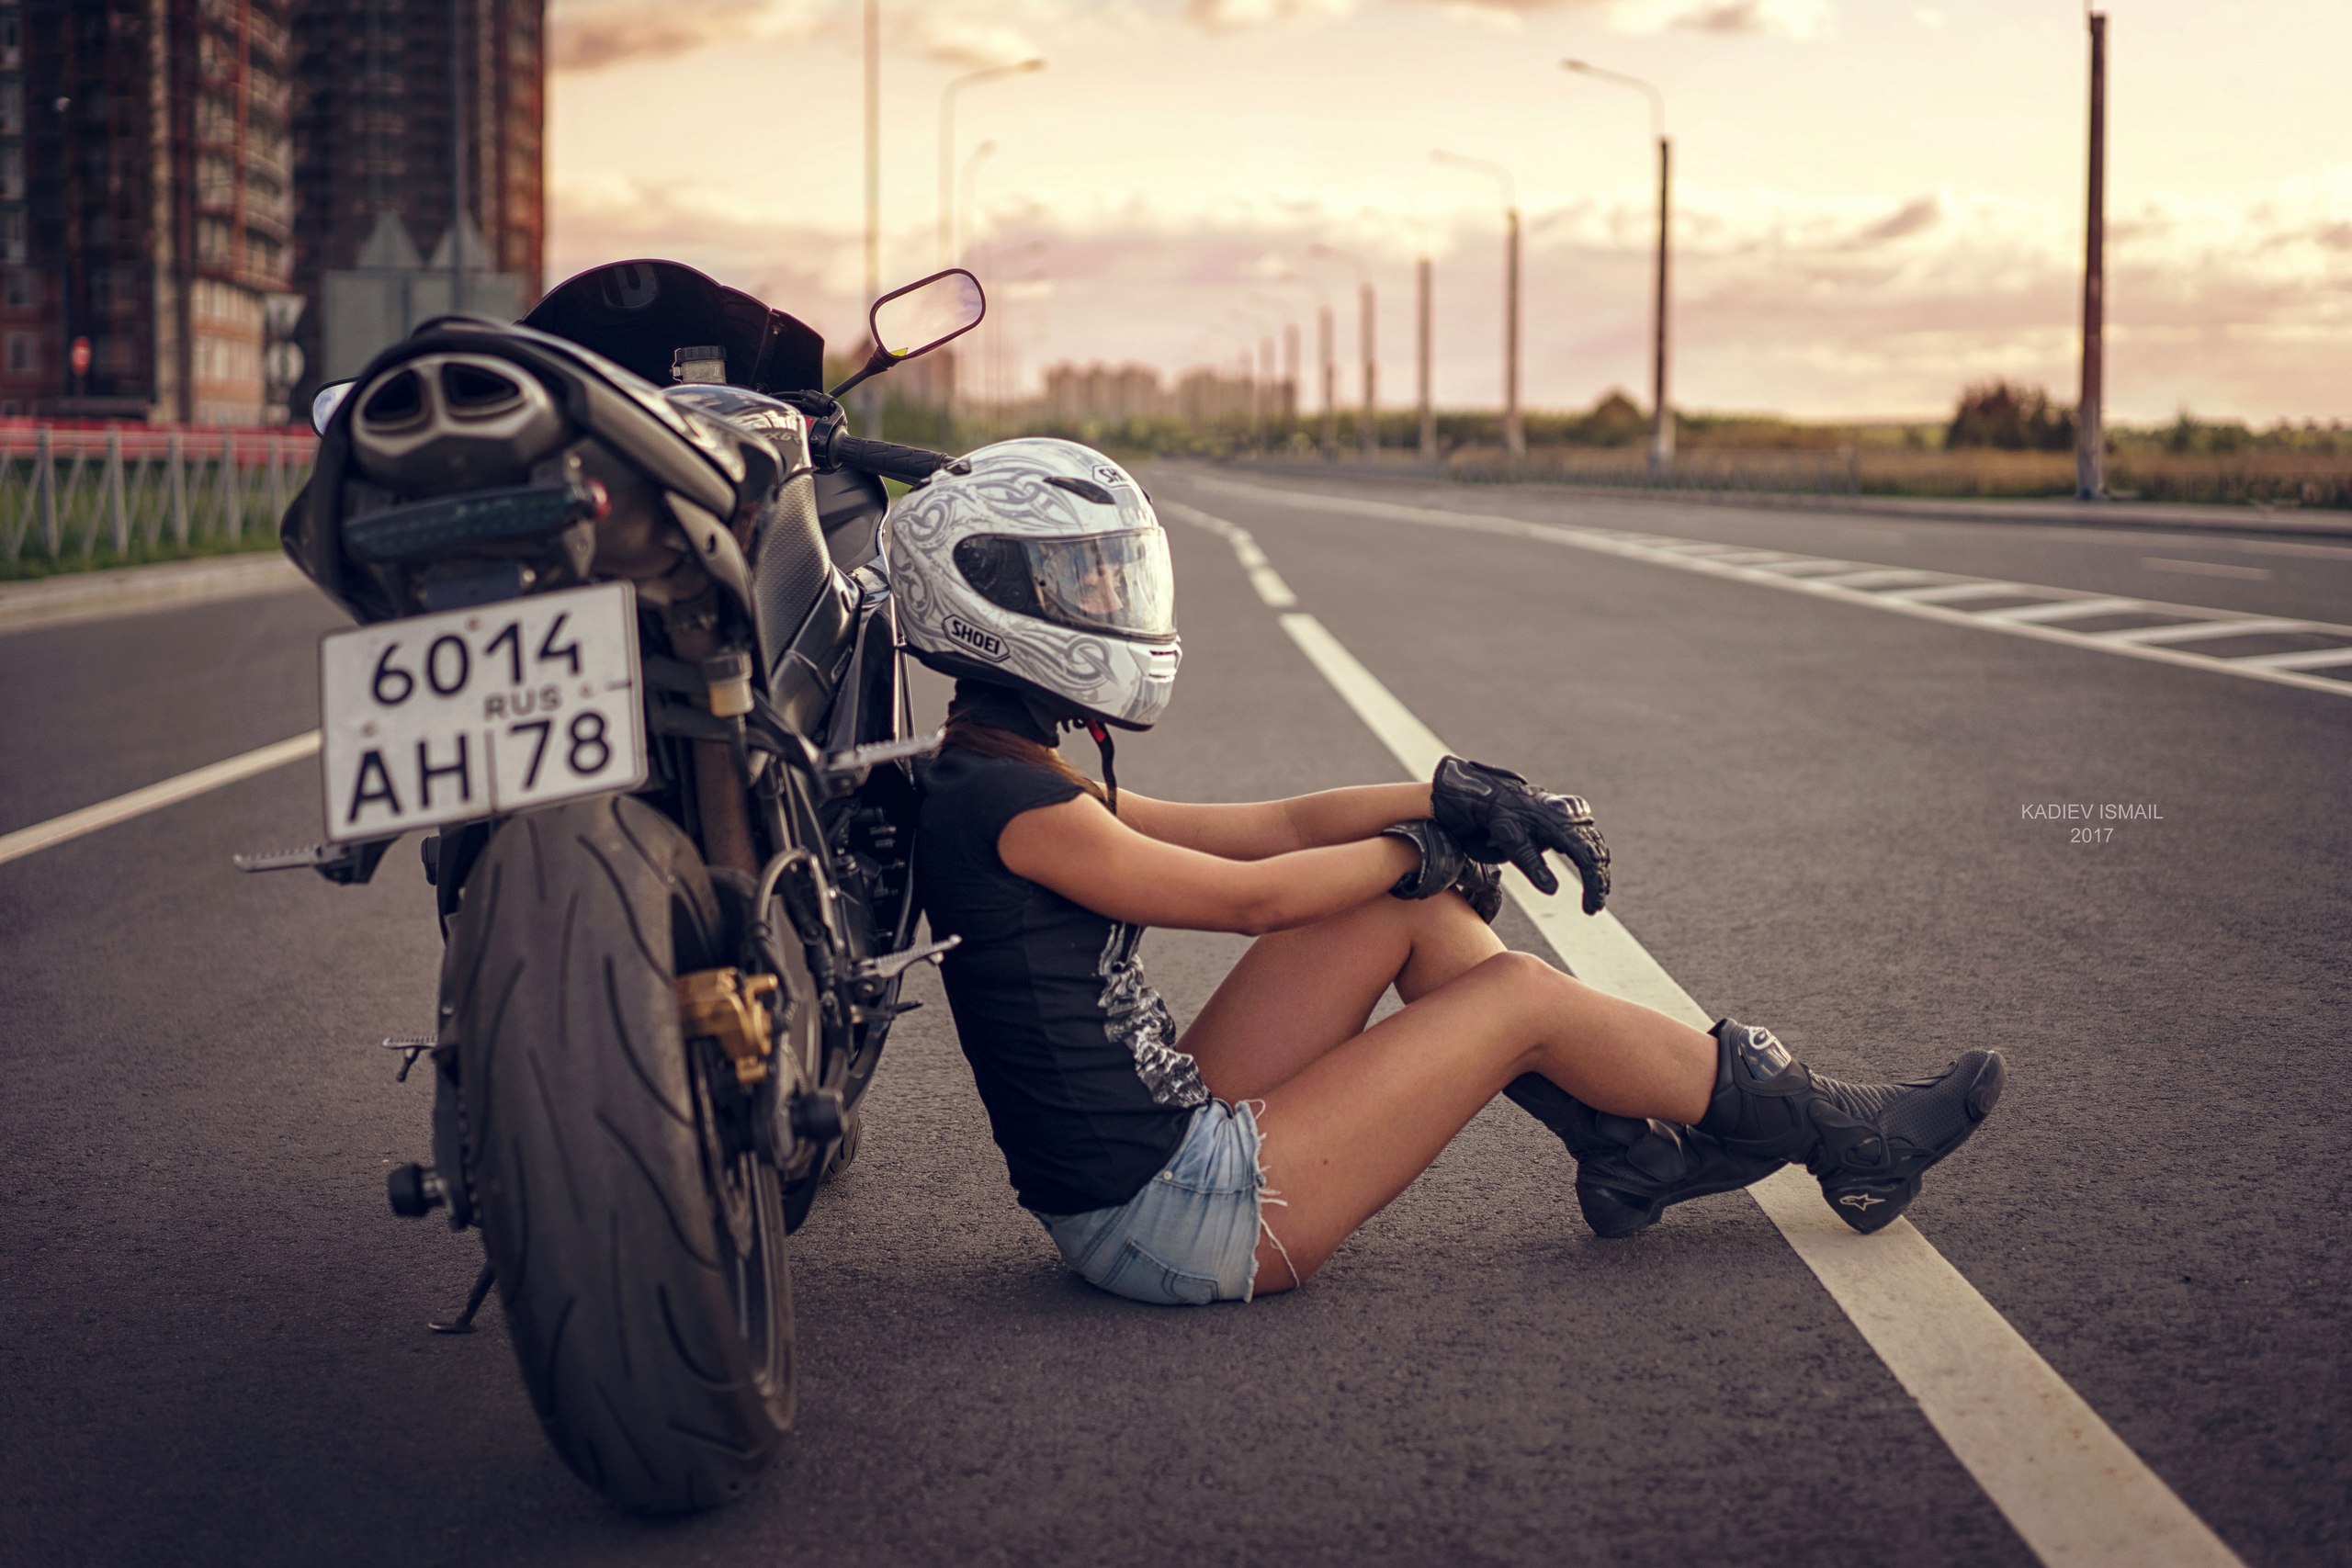 Women Model Kadiev Ismail Women With Bikes Helmet Motorcycle Women Outdoors Vehicle 2560x1707